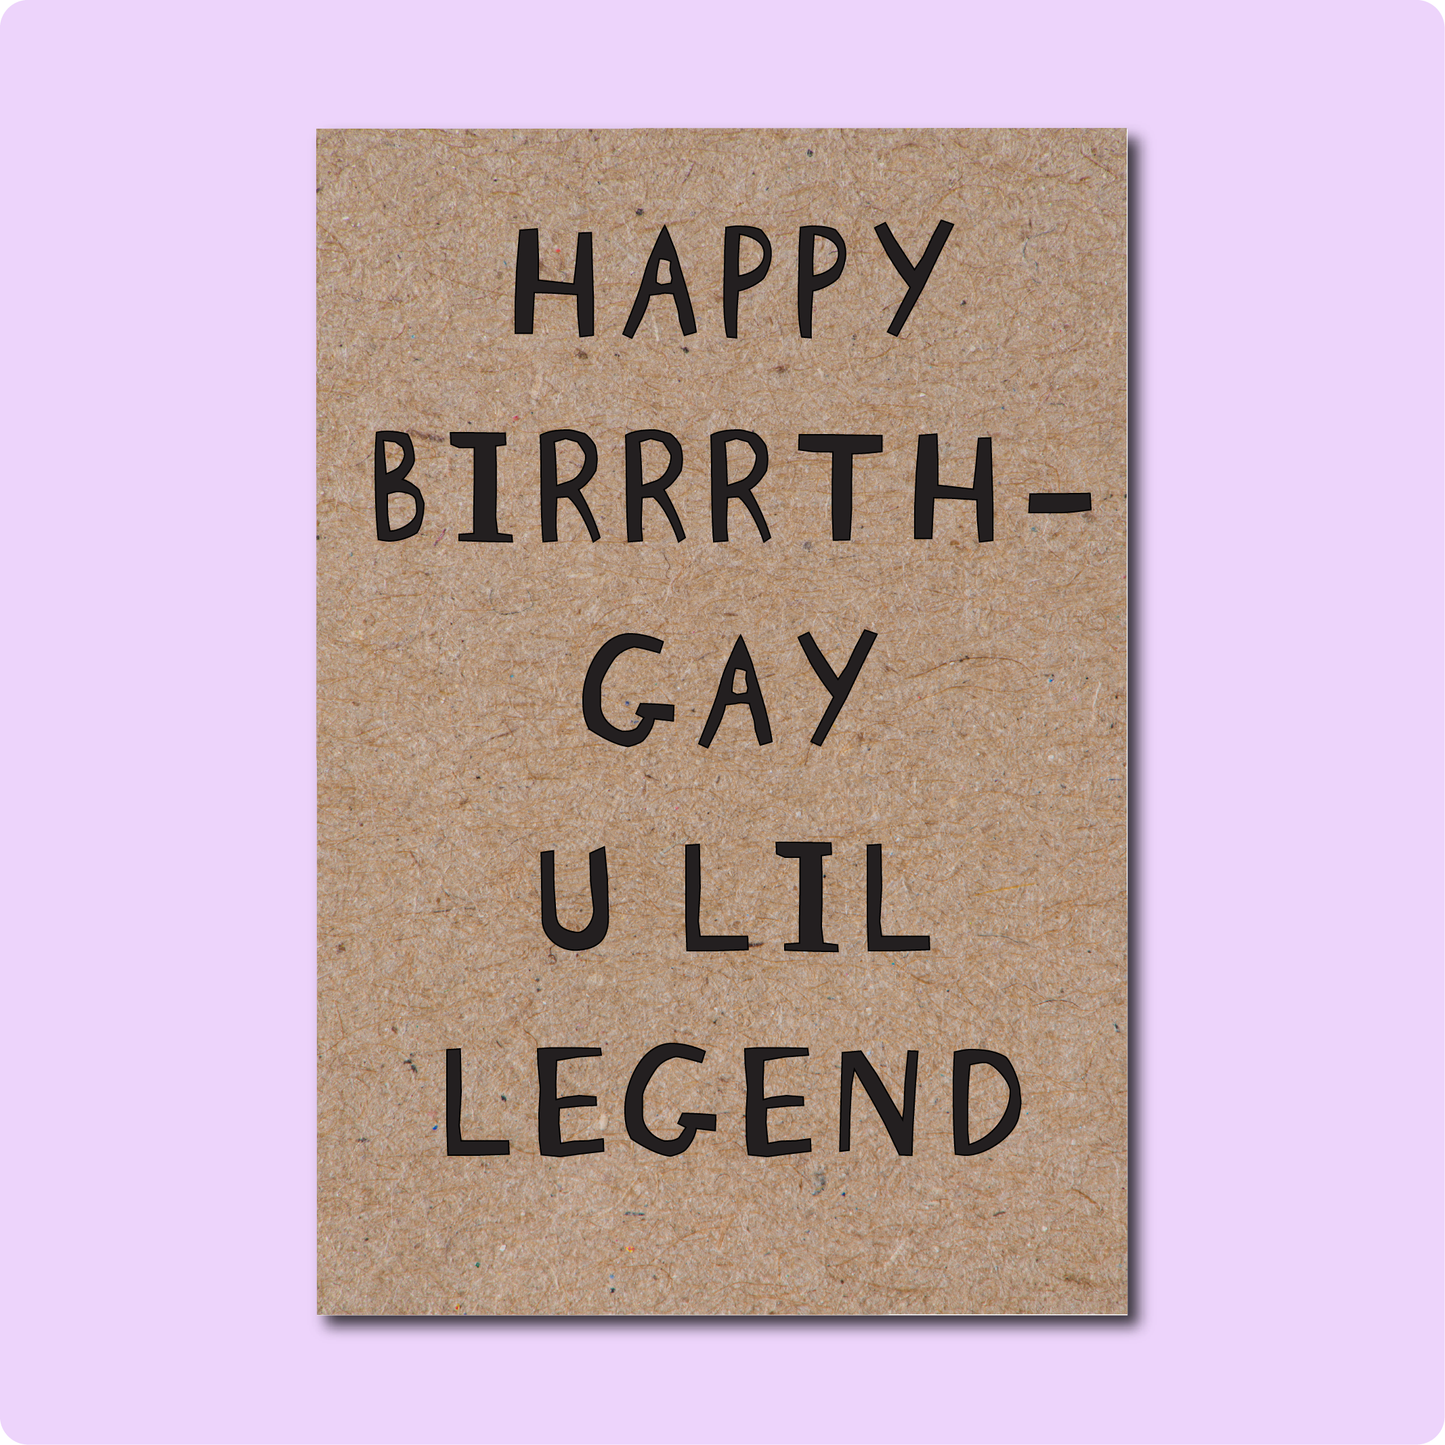 Happy BirrrthGAY U Lil Legend Greeting Card | LGBTQ + Birthday Card